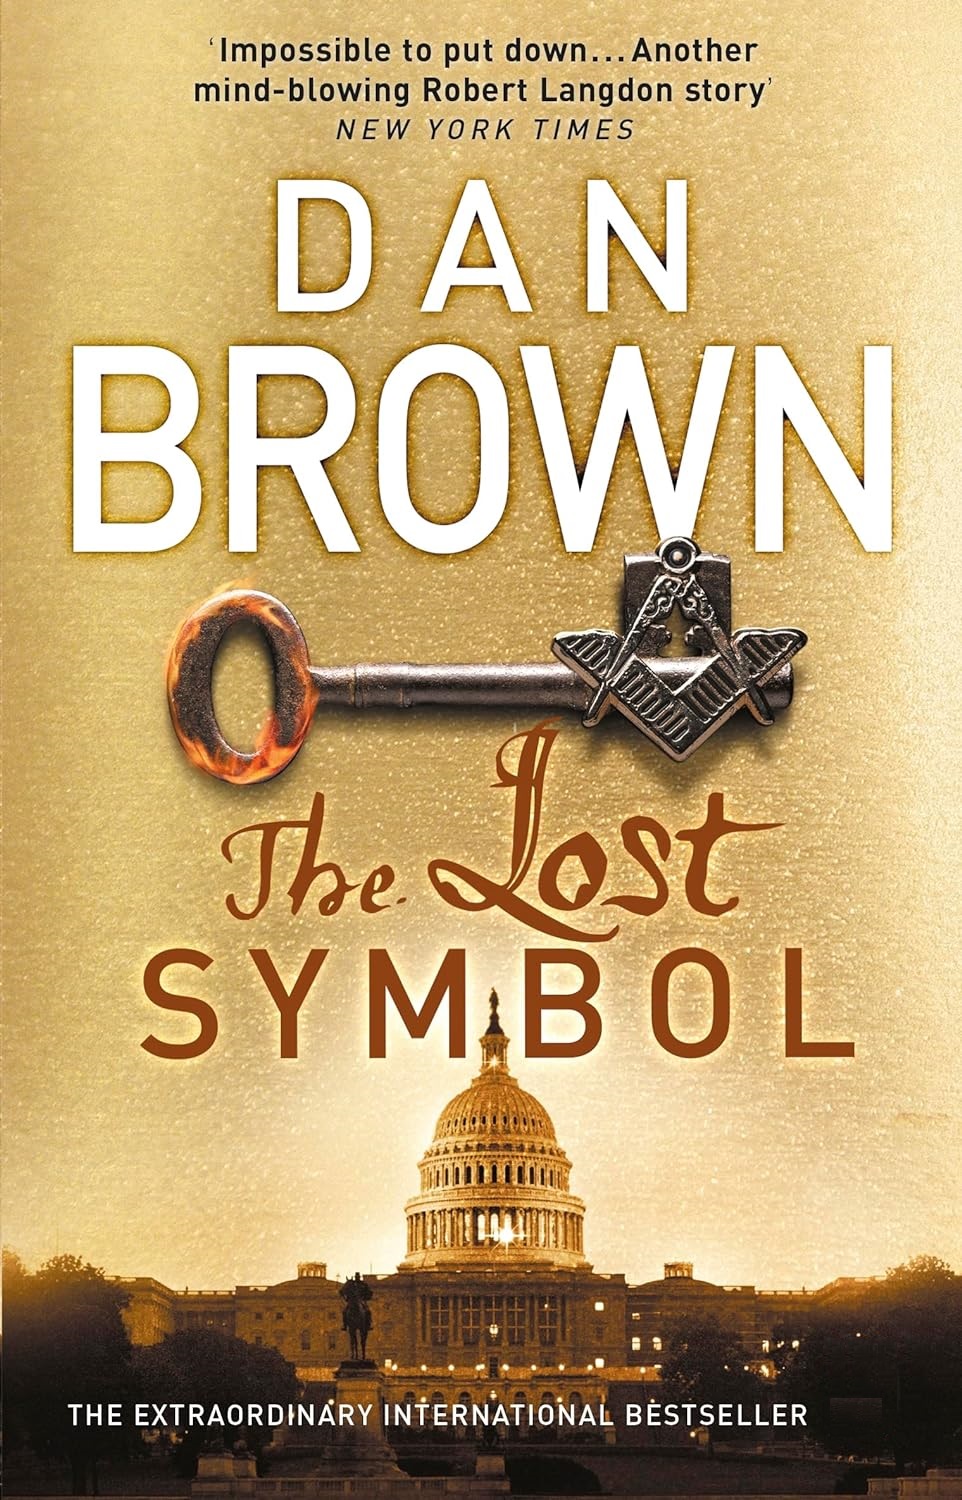 Sách Ngoại Văn - The Lost Symbol (Paperback by Dan Brown (Author))